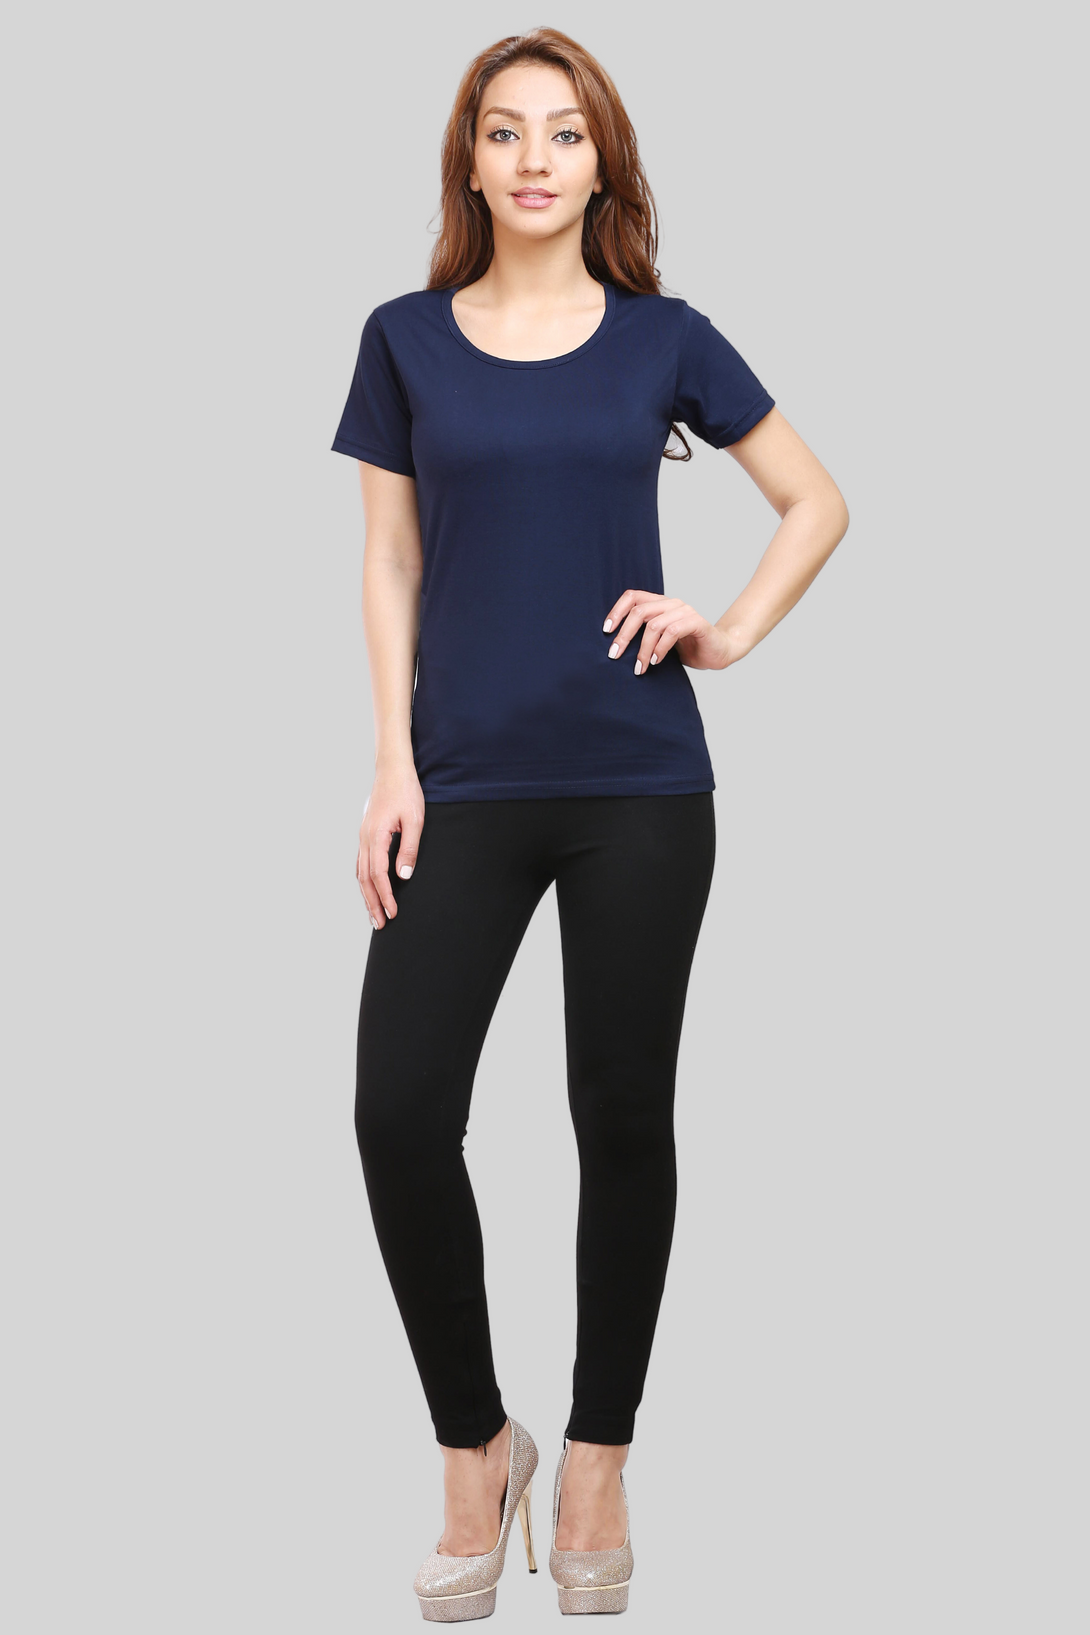 Navy Blue Scoop Neck T-Shirt For Women - WowWaves - 2